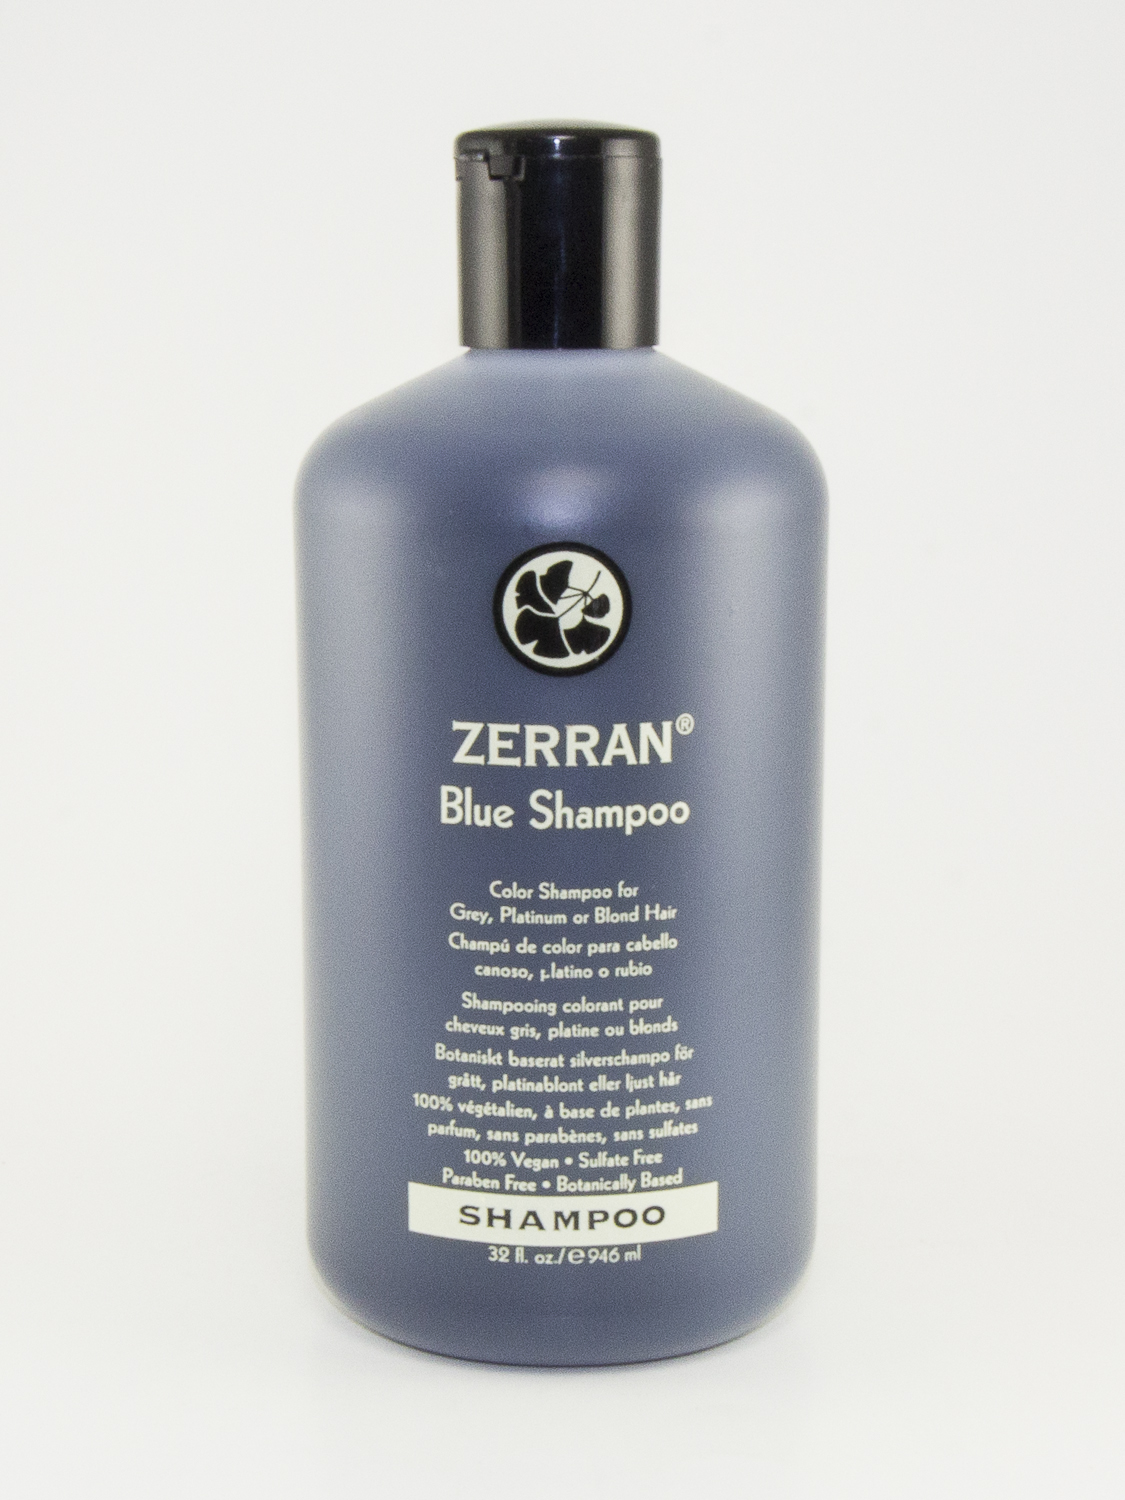 Blue Shampoo Zerran Hair Care